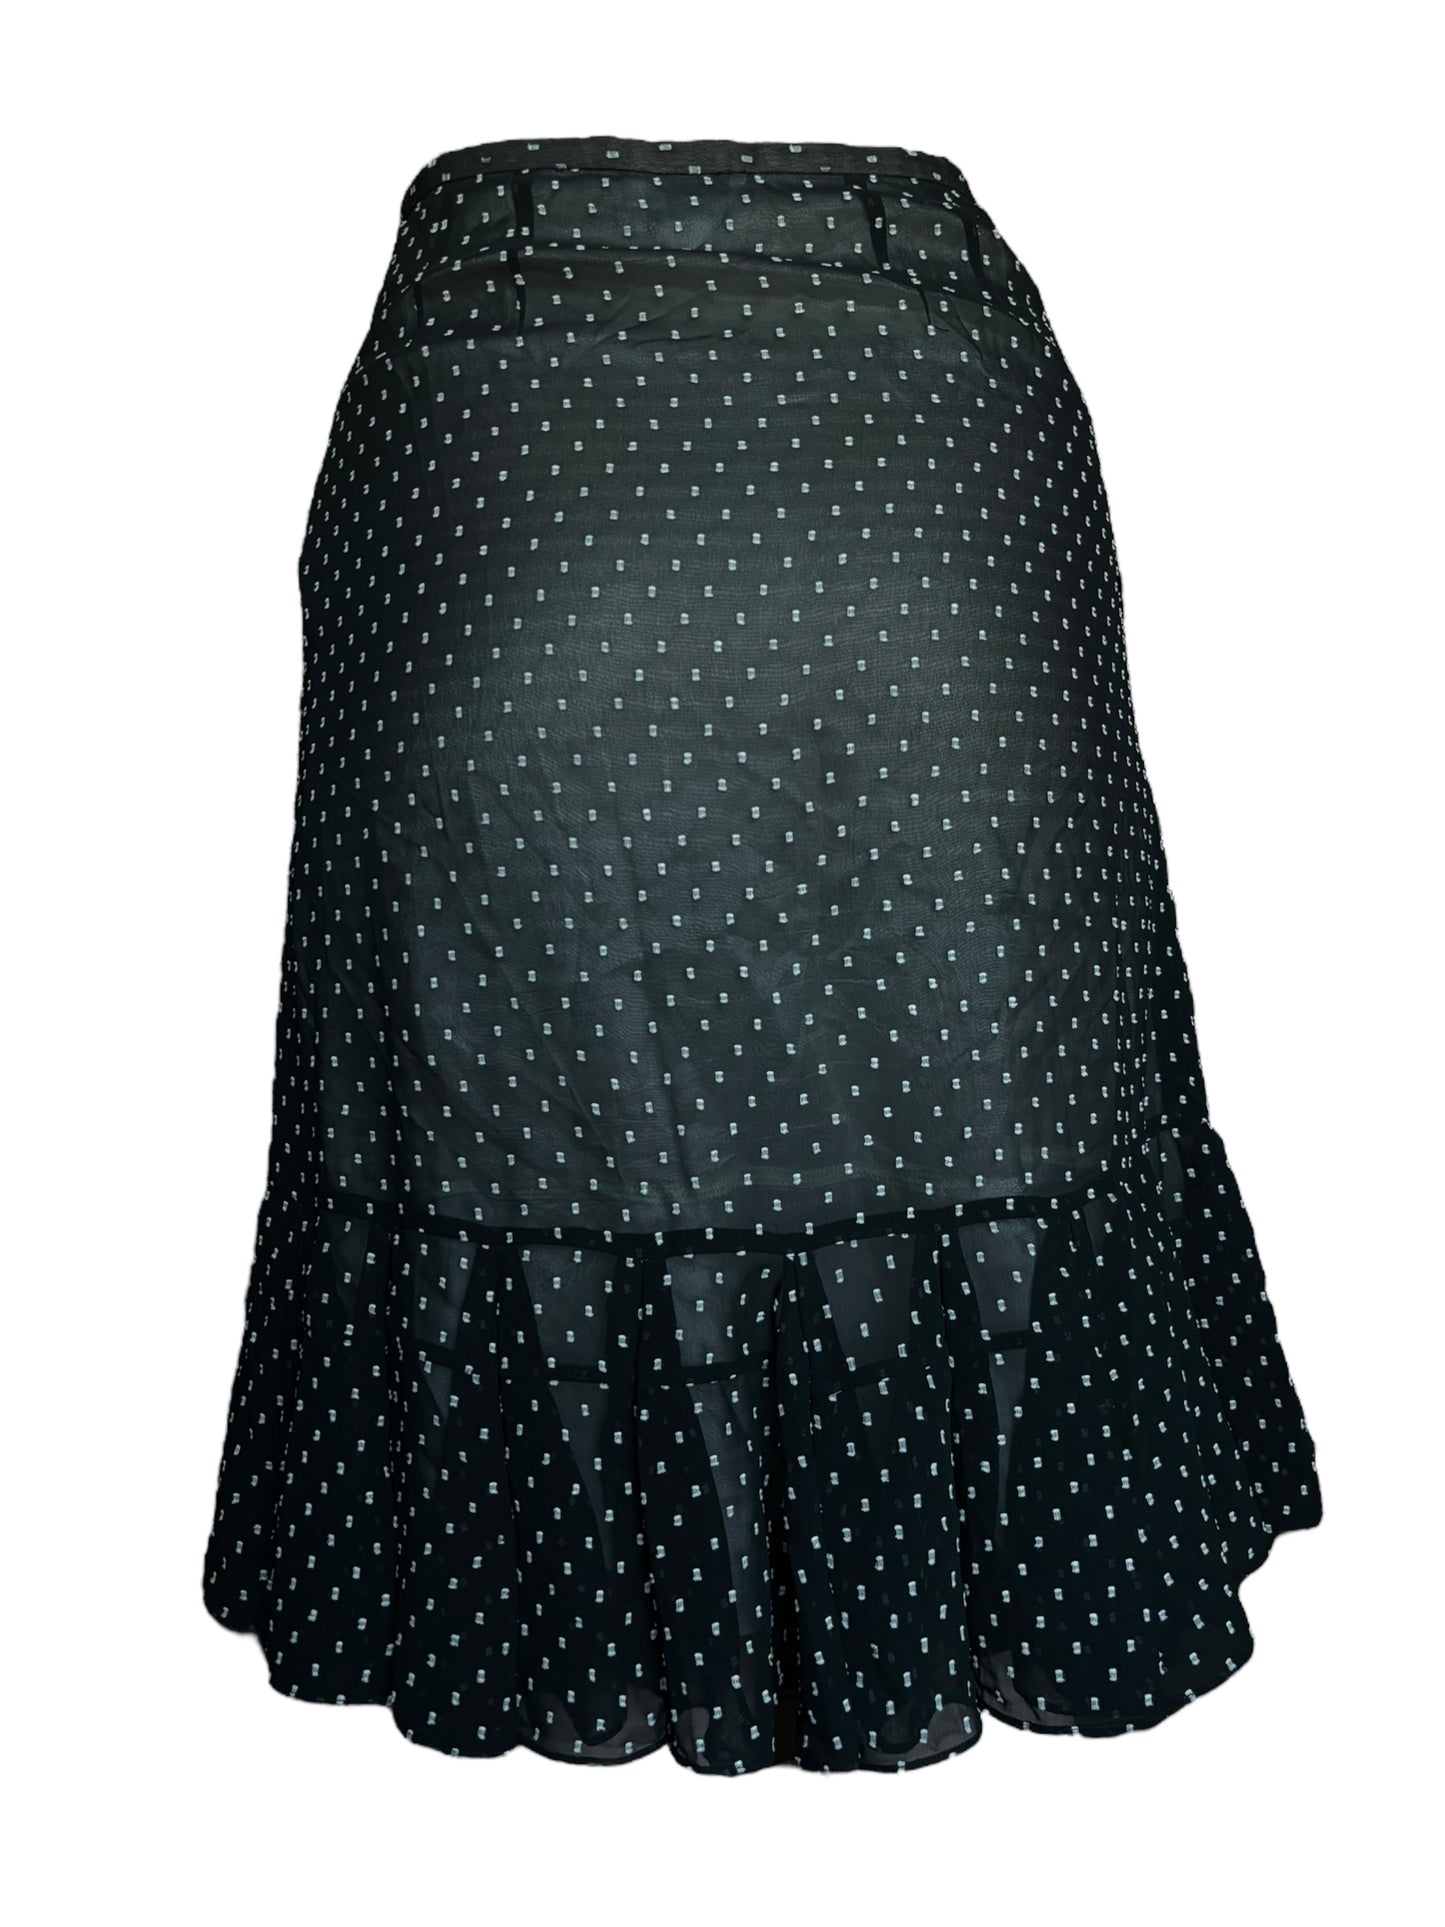 Vintage Polka Dot Midi Skirt - S